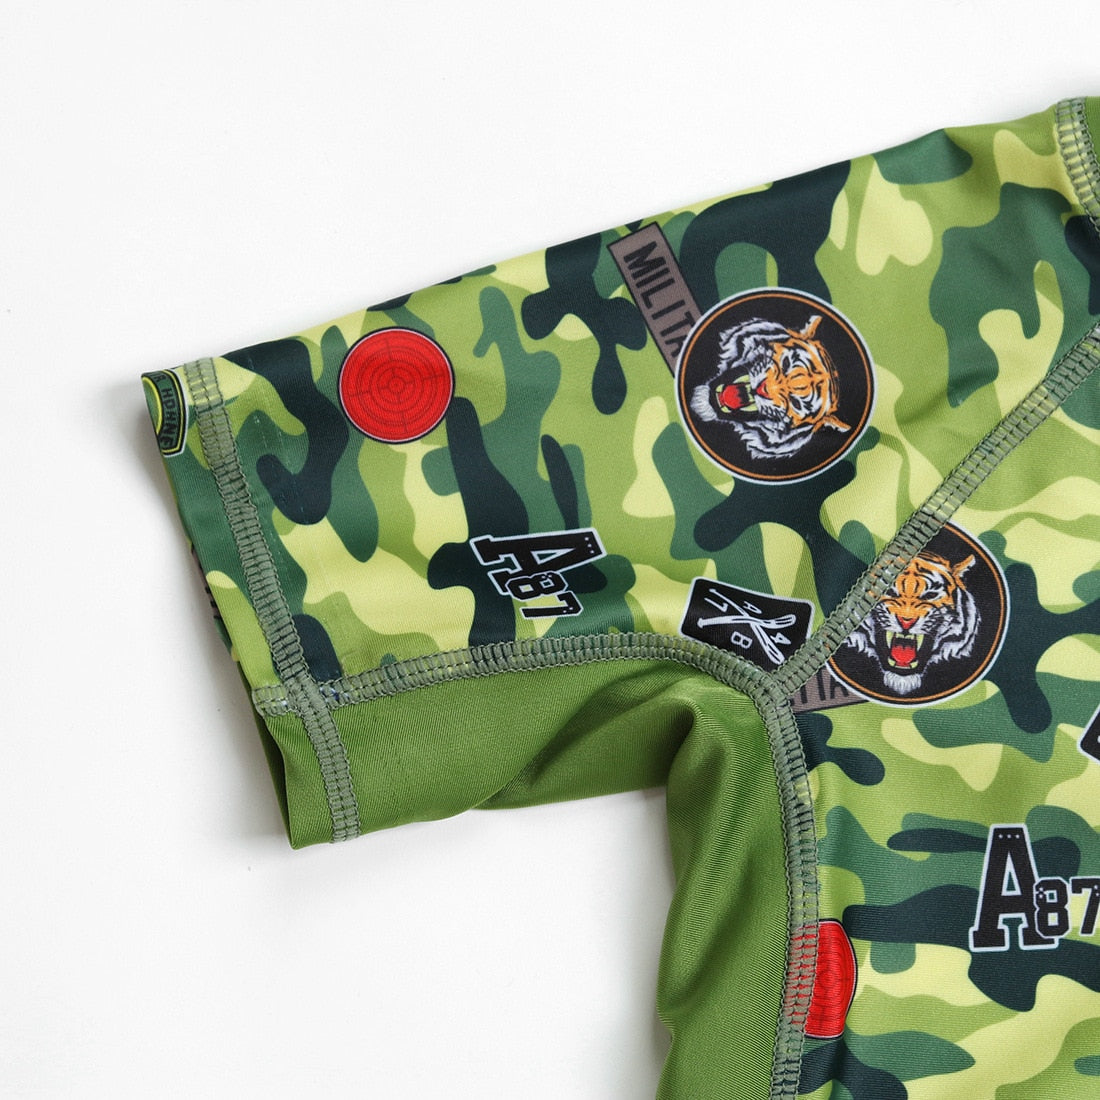 Kids Swimwear for Boys New  Camouflage Badges Printing Children Rash Guards Swimming Wear